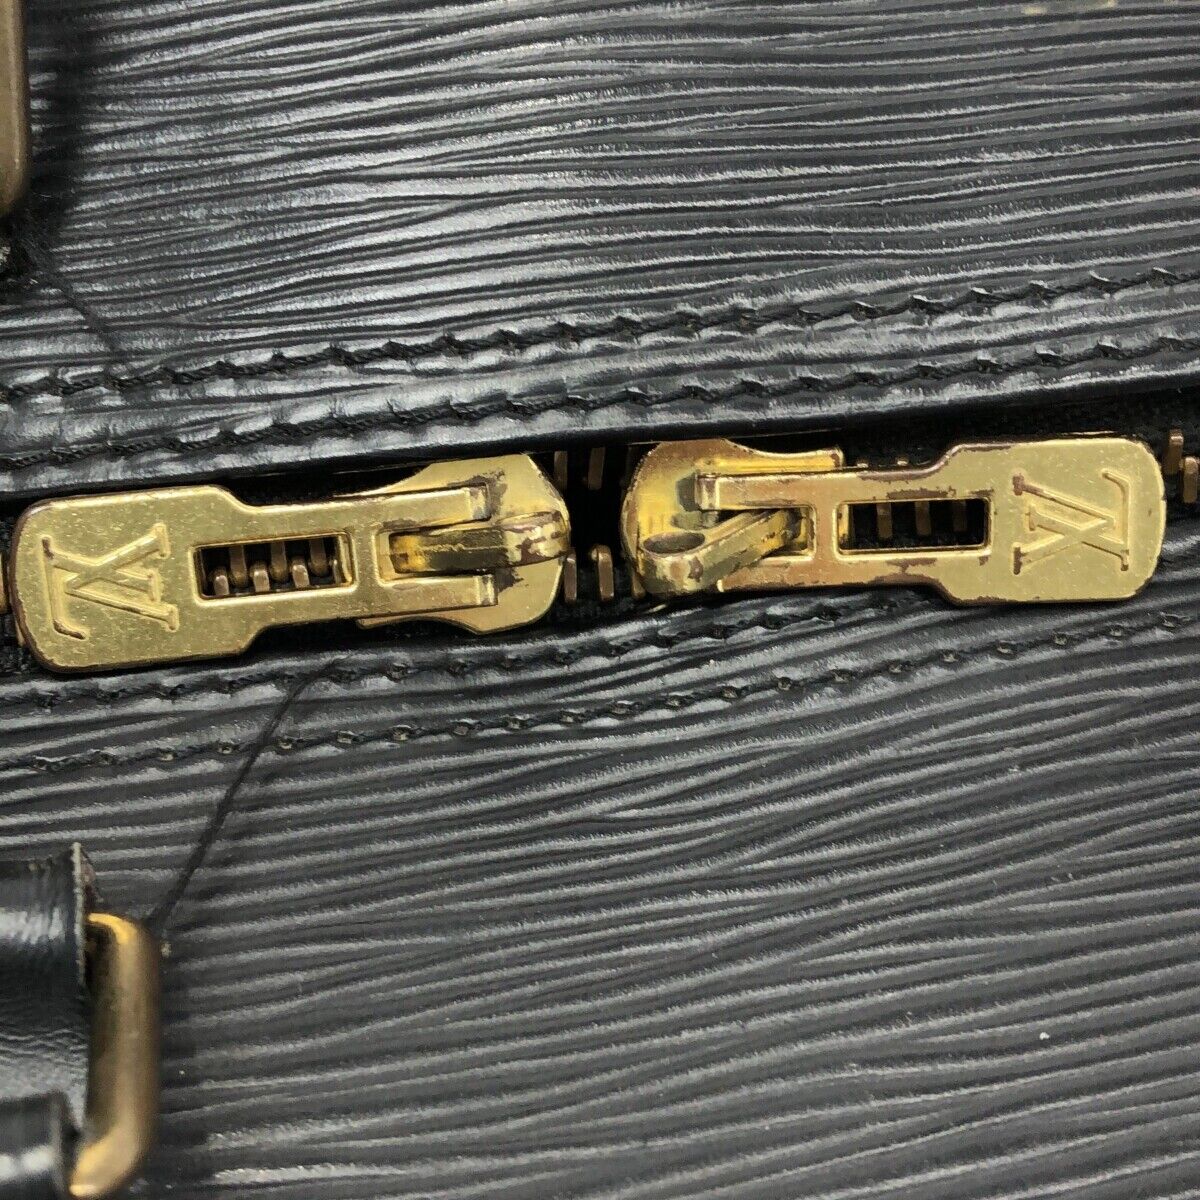 Louis Vuitton Vintage - Epi Keepall 50 Bag - Black - Leather and